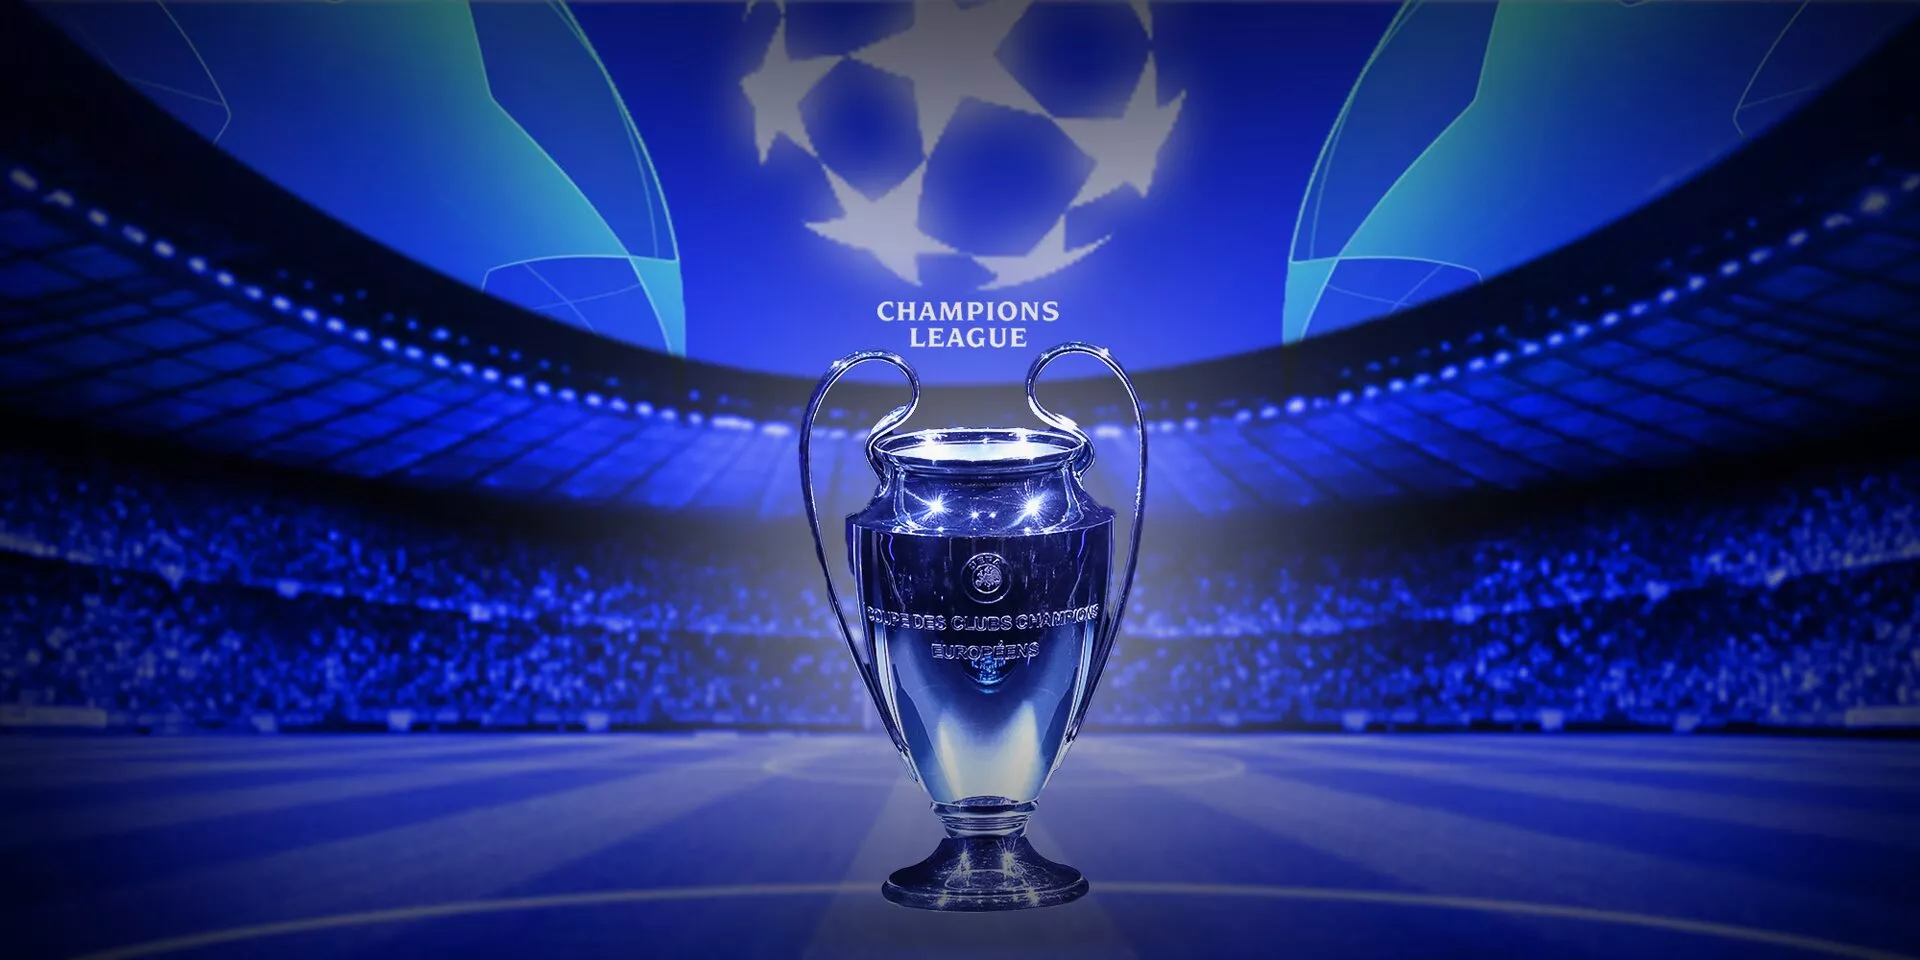 UEFA Champions League 2023-24: Full groups & teams